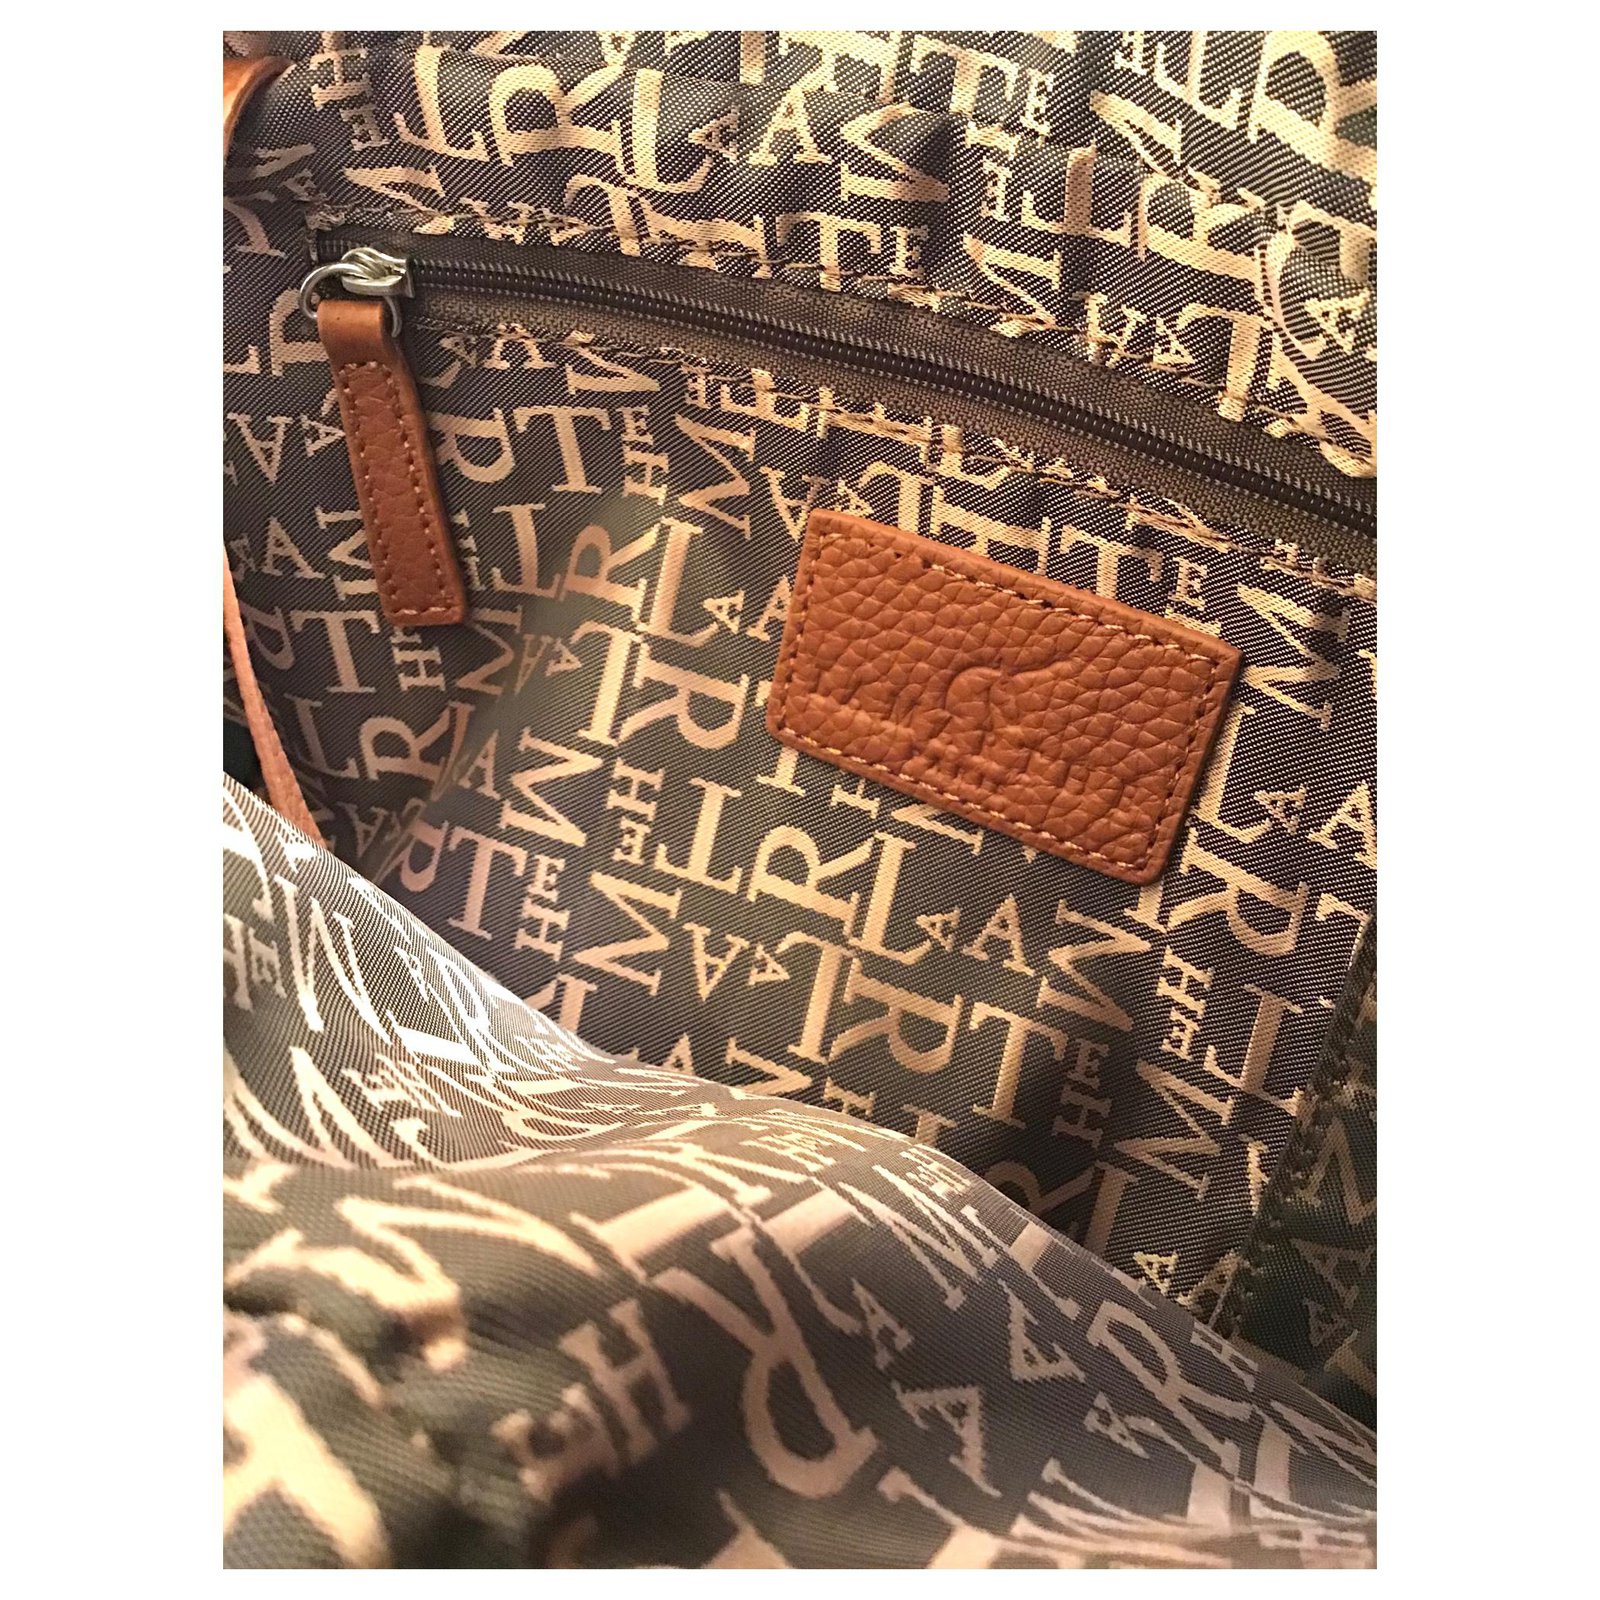 Original Bonia shoulder bag (Togo cow leather) - Bags & Wallets